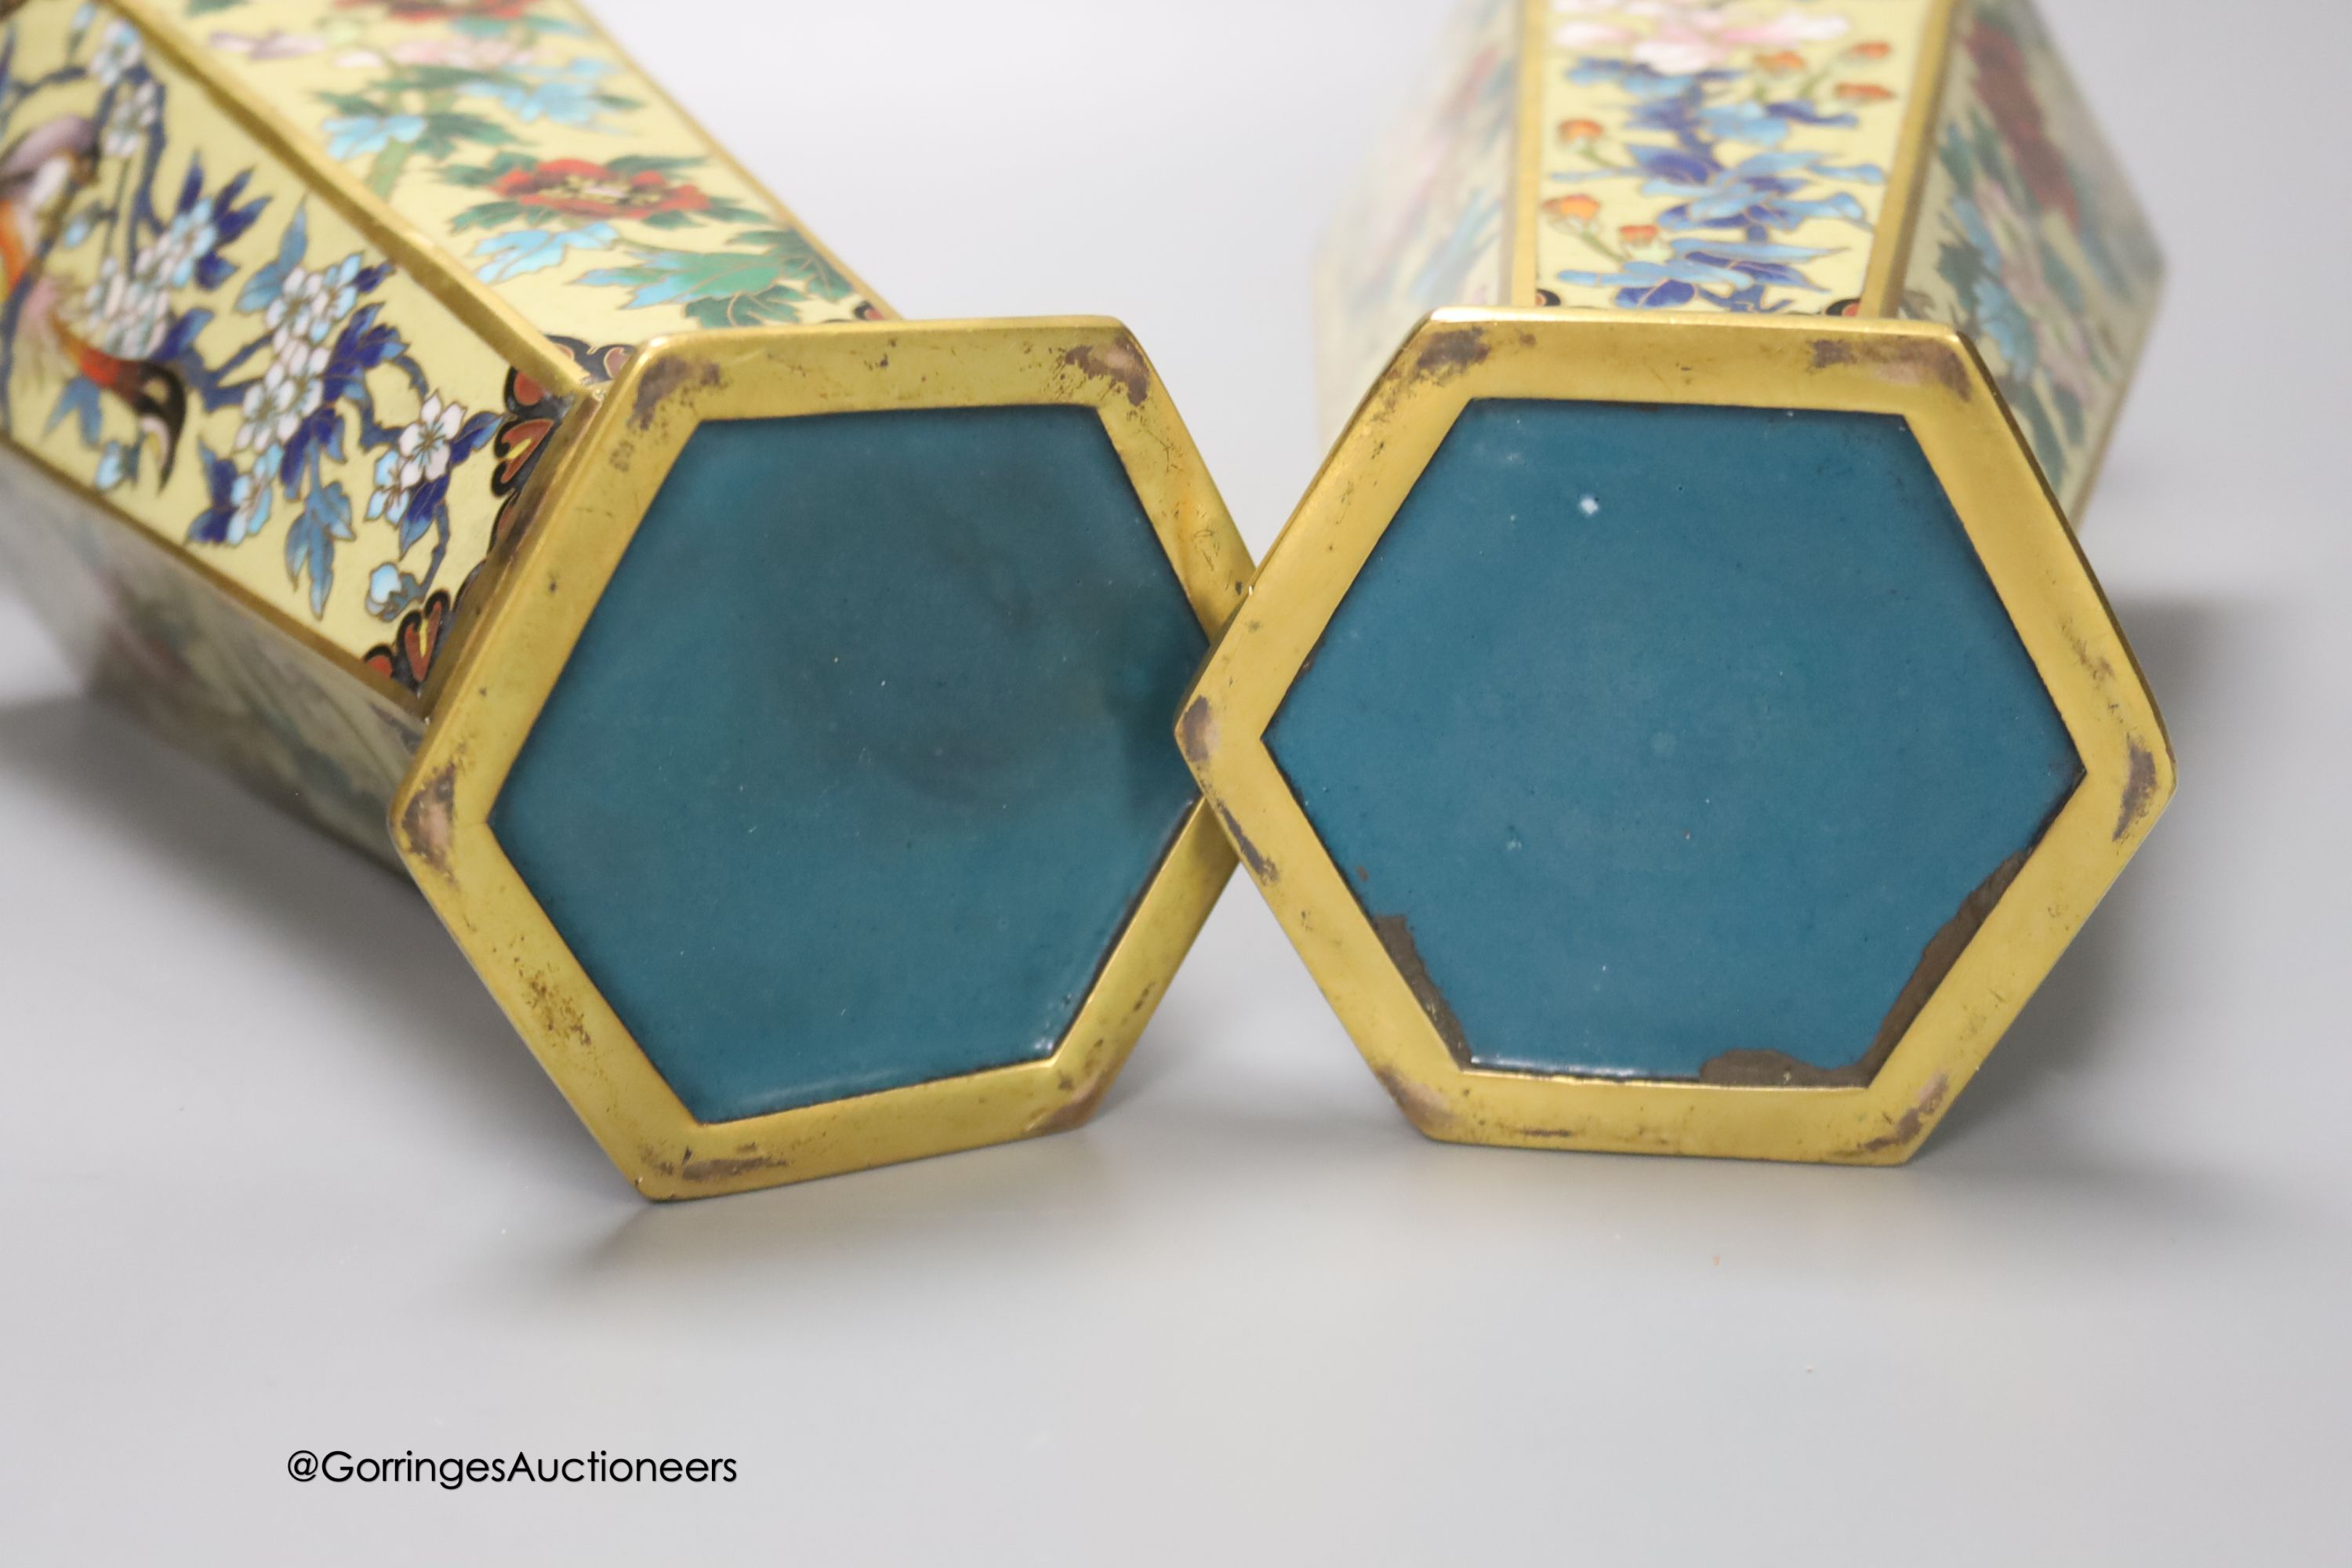 A pair of Chinese cloisonne enamelled hexagonal vases, 26cm